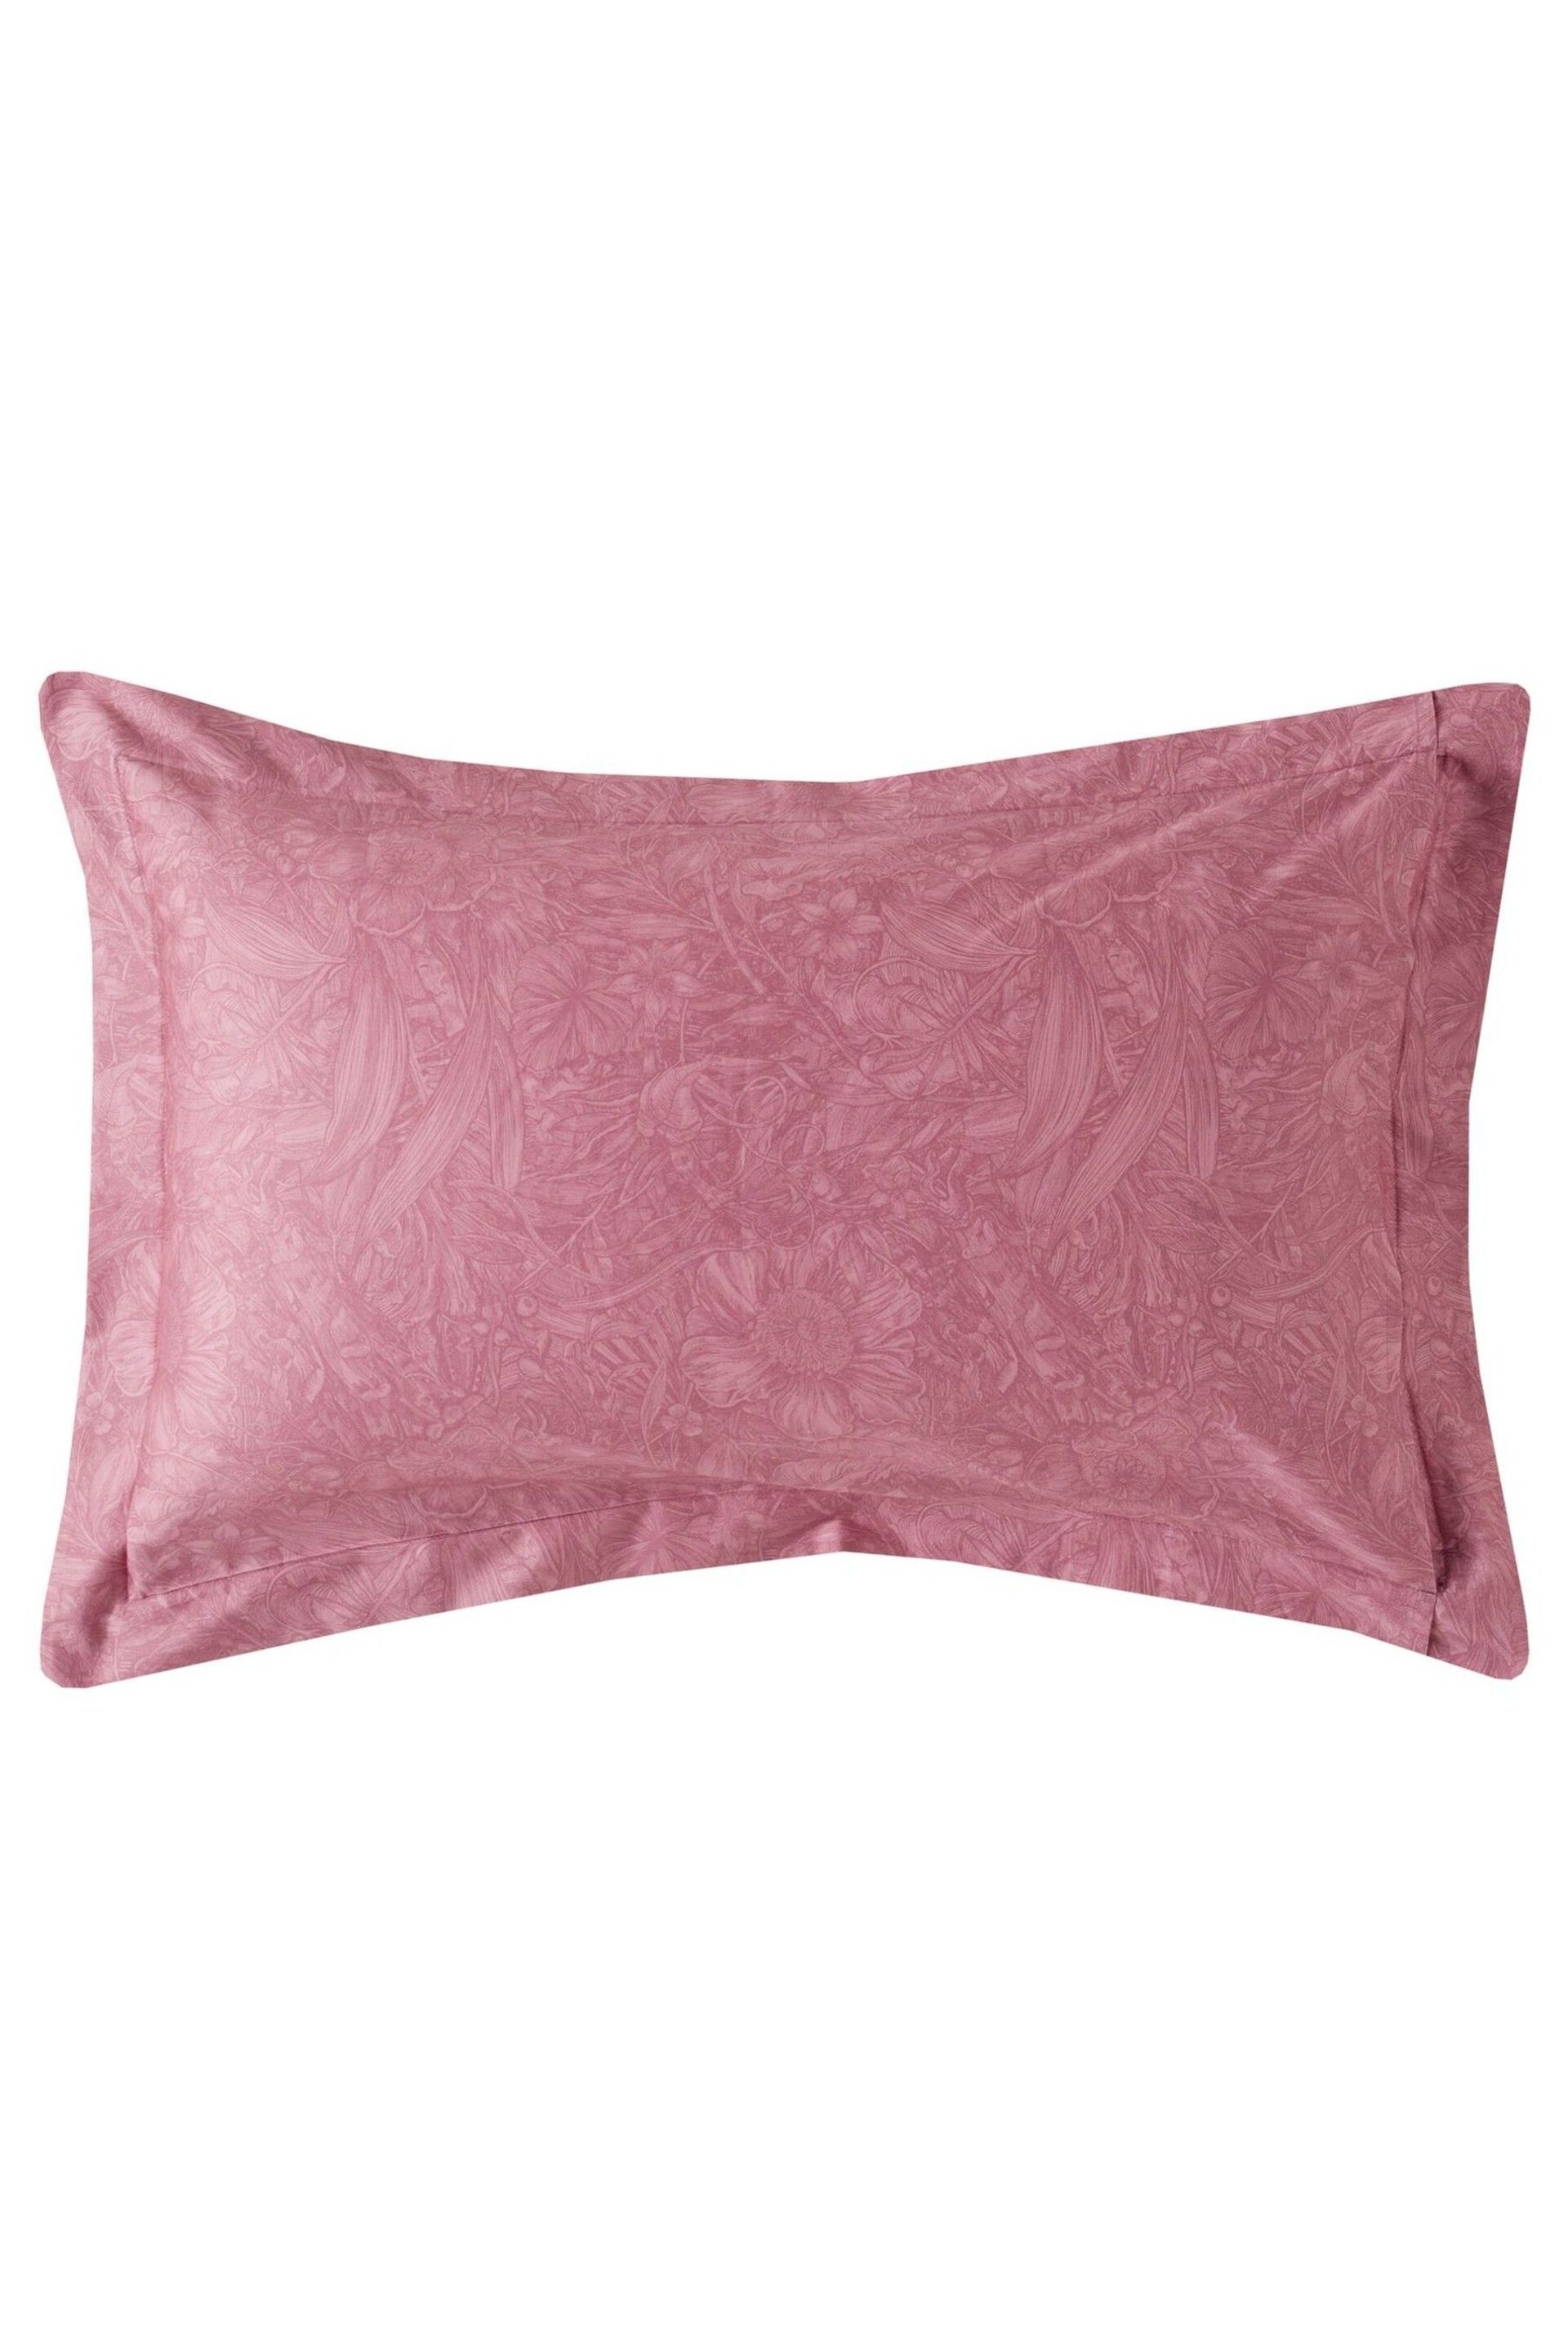 Timorous Beasties Midnight Berkeley Blooms Duvet Cover and Pillowcase Set - Image 8 of 8